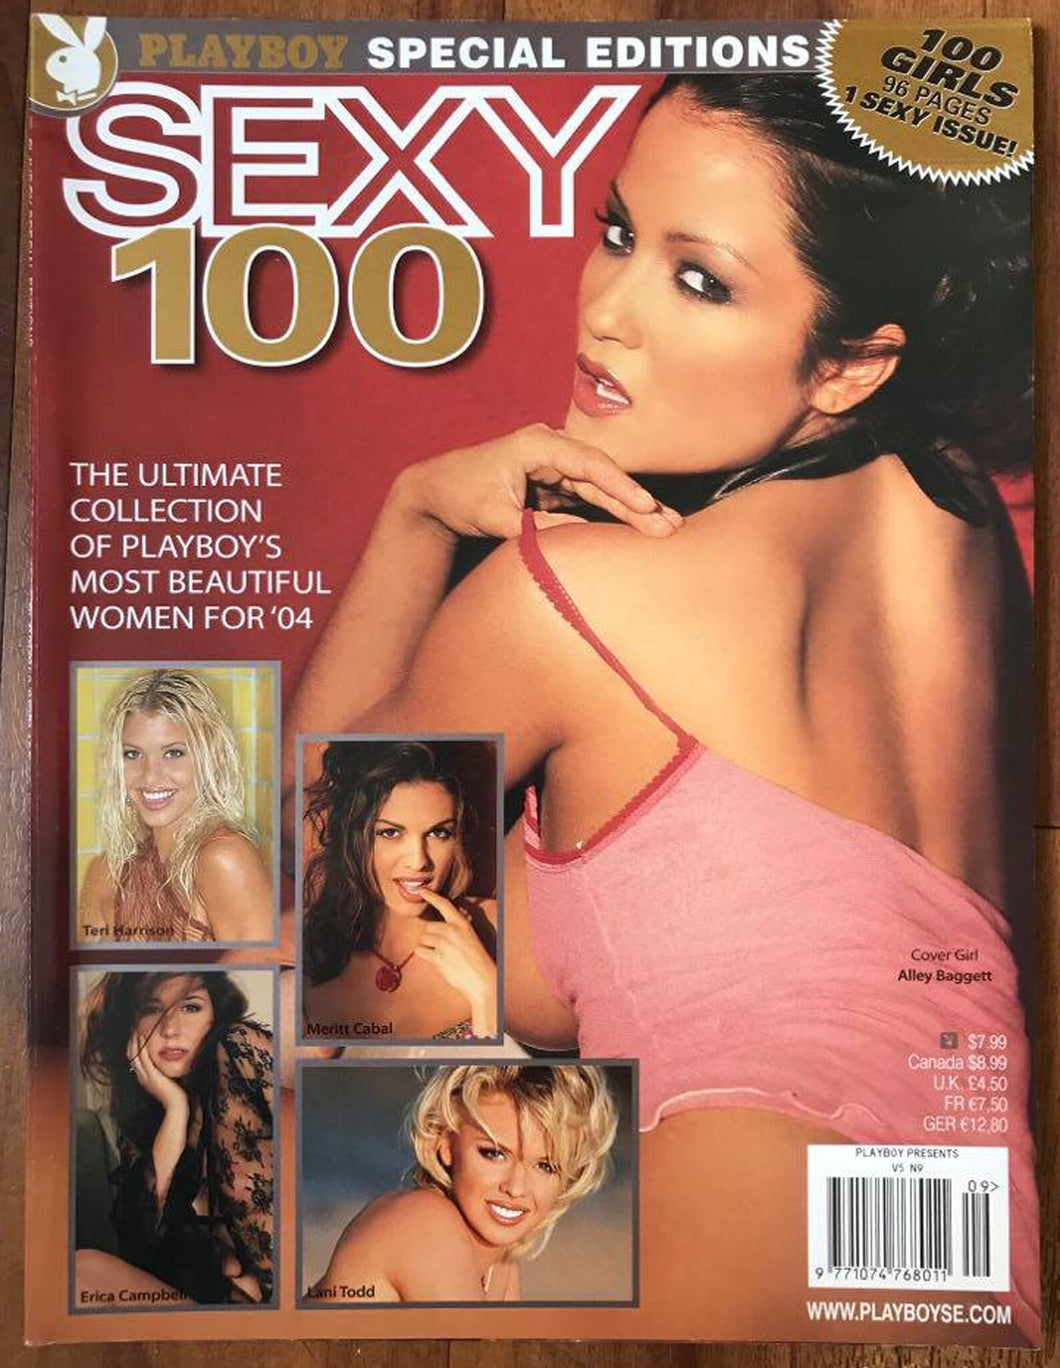 Playboy 2004 special edition Sexy 100